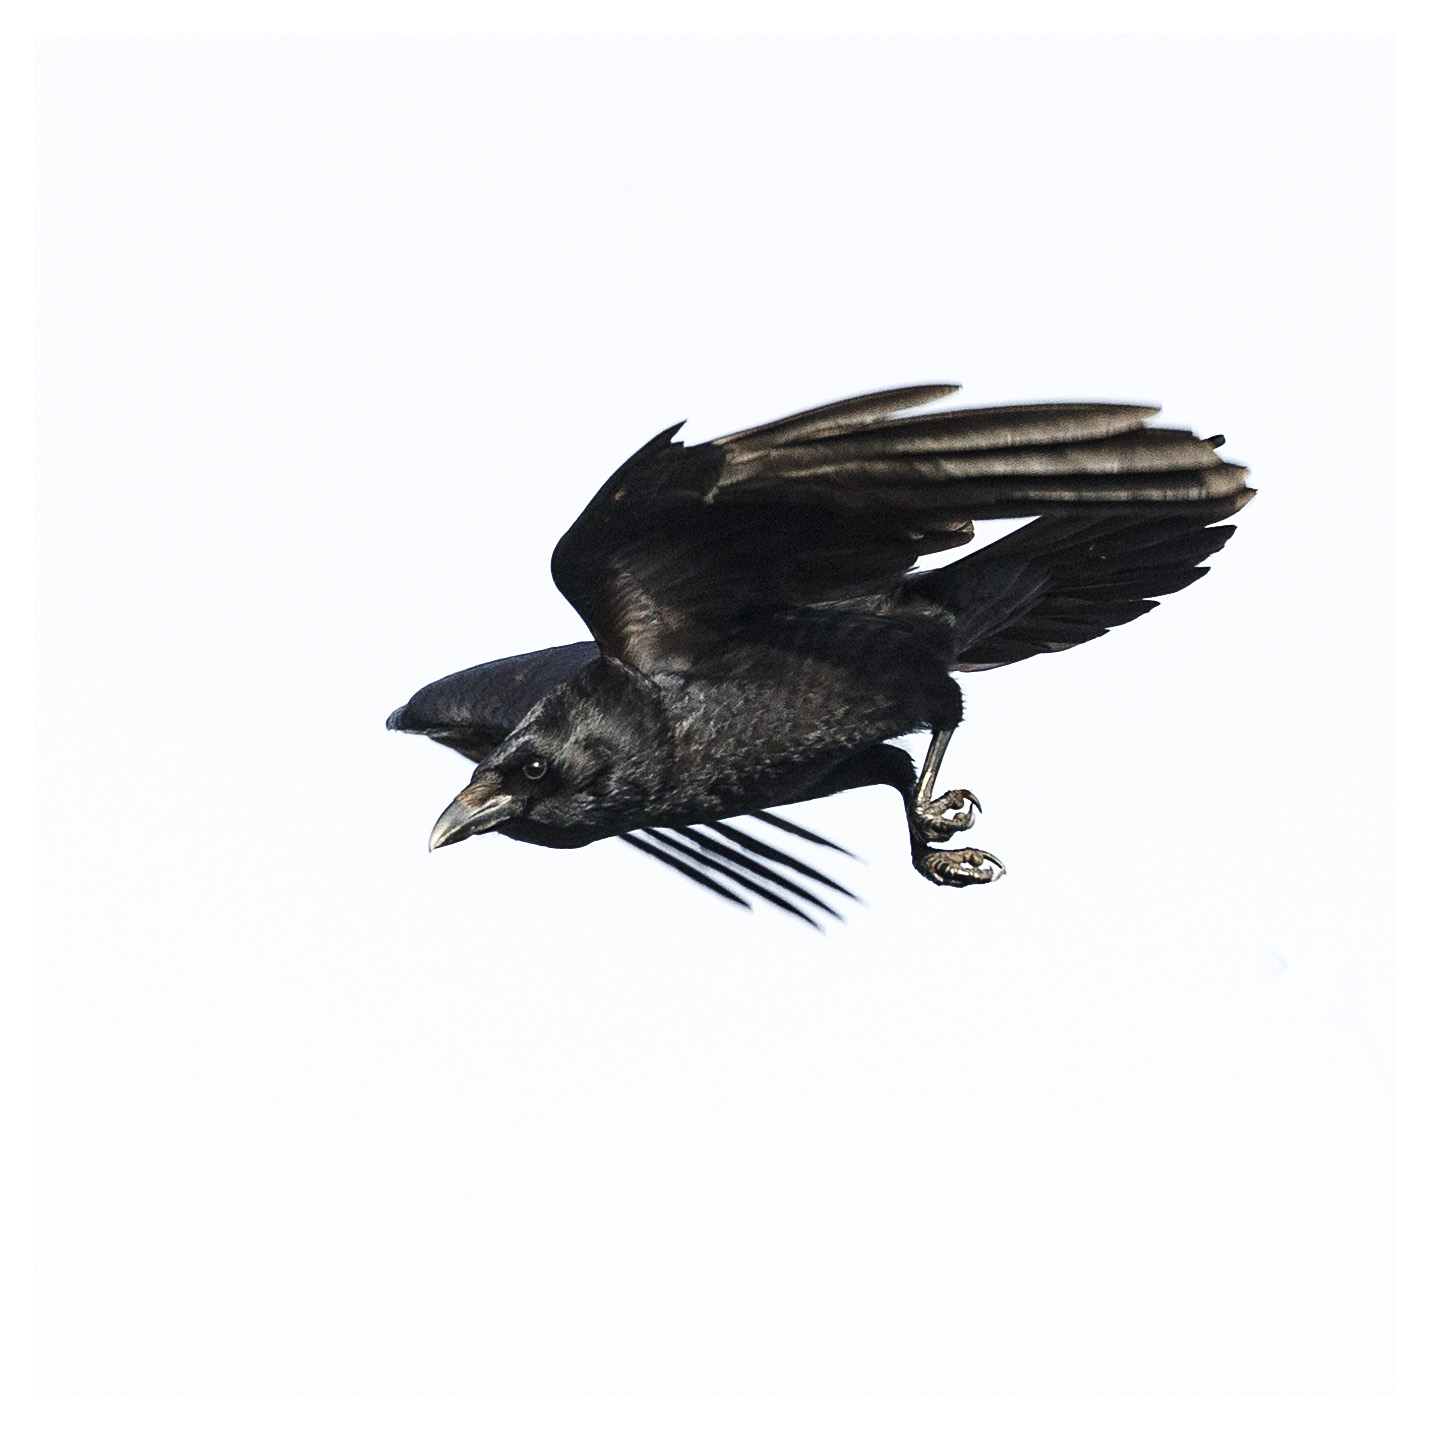 Corvids – The Crow